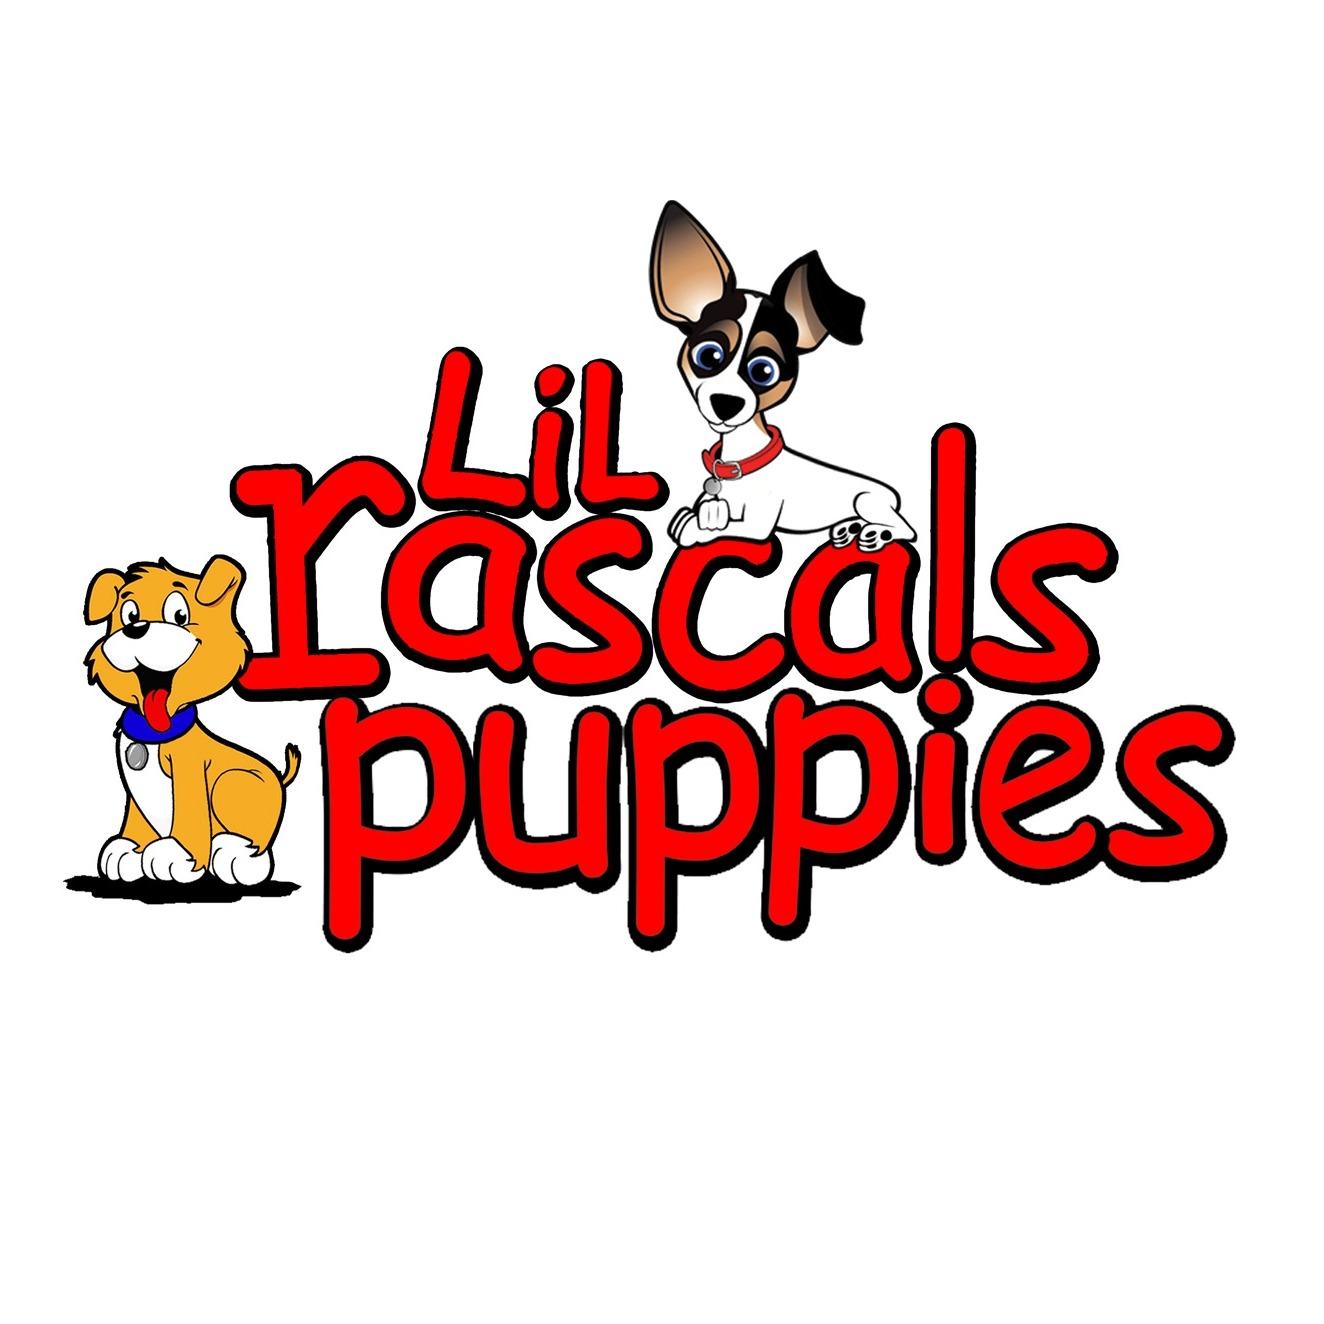 Lil Rascals Puppies